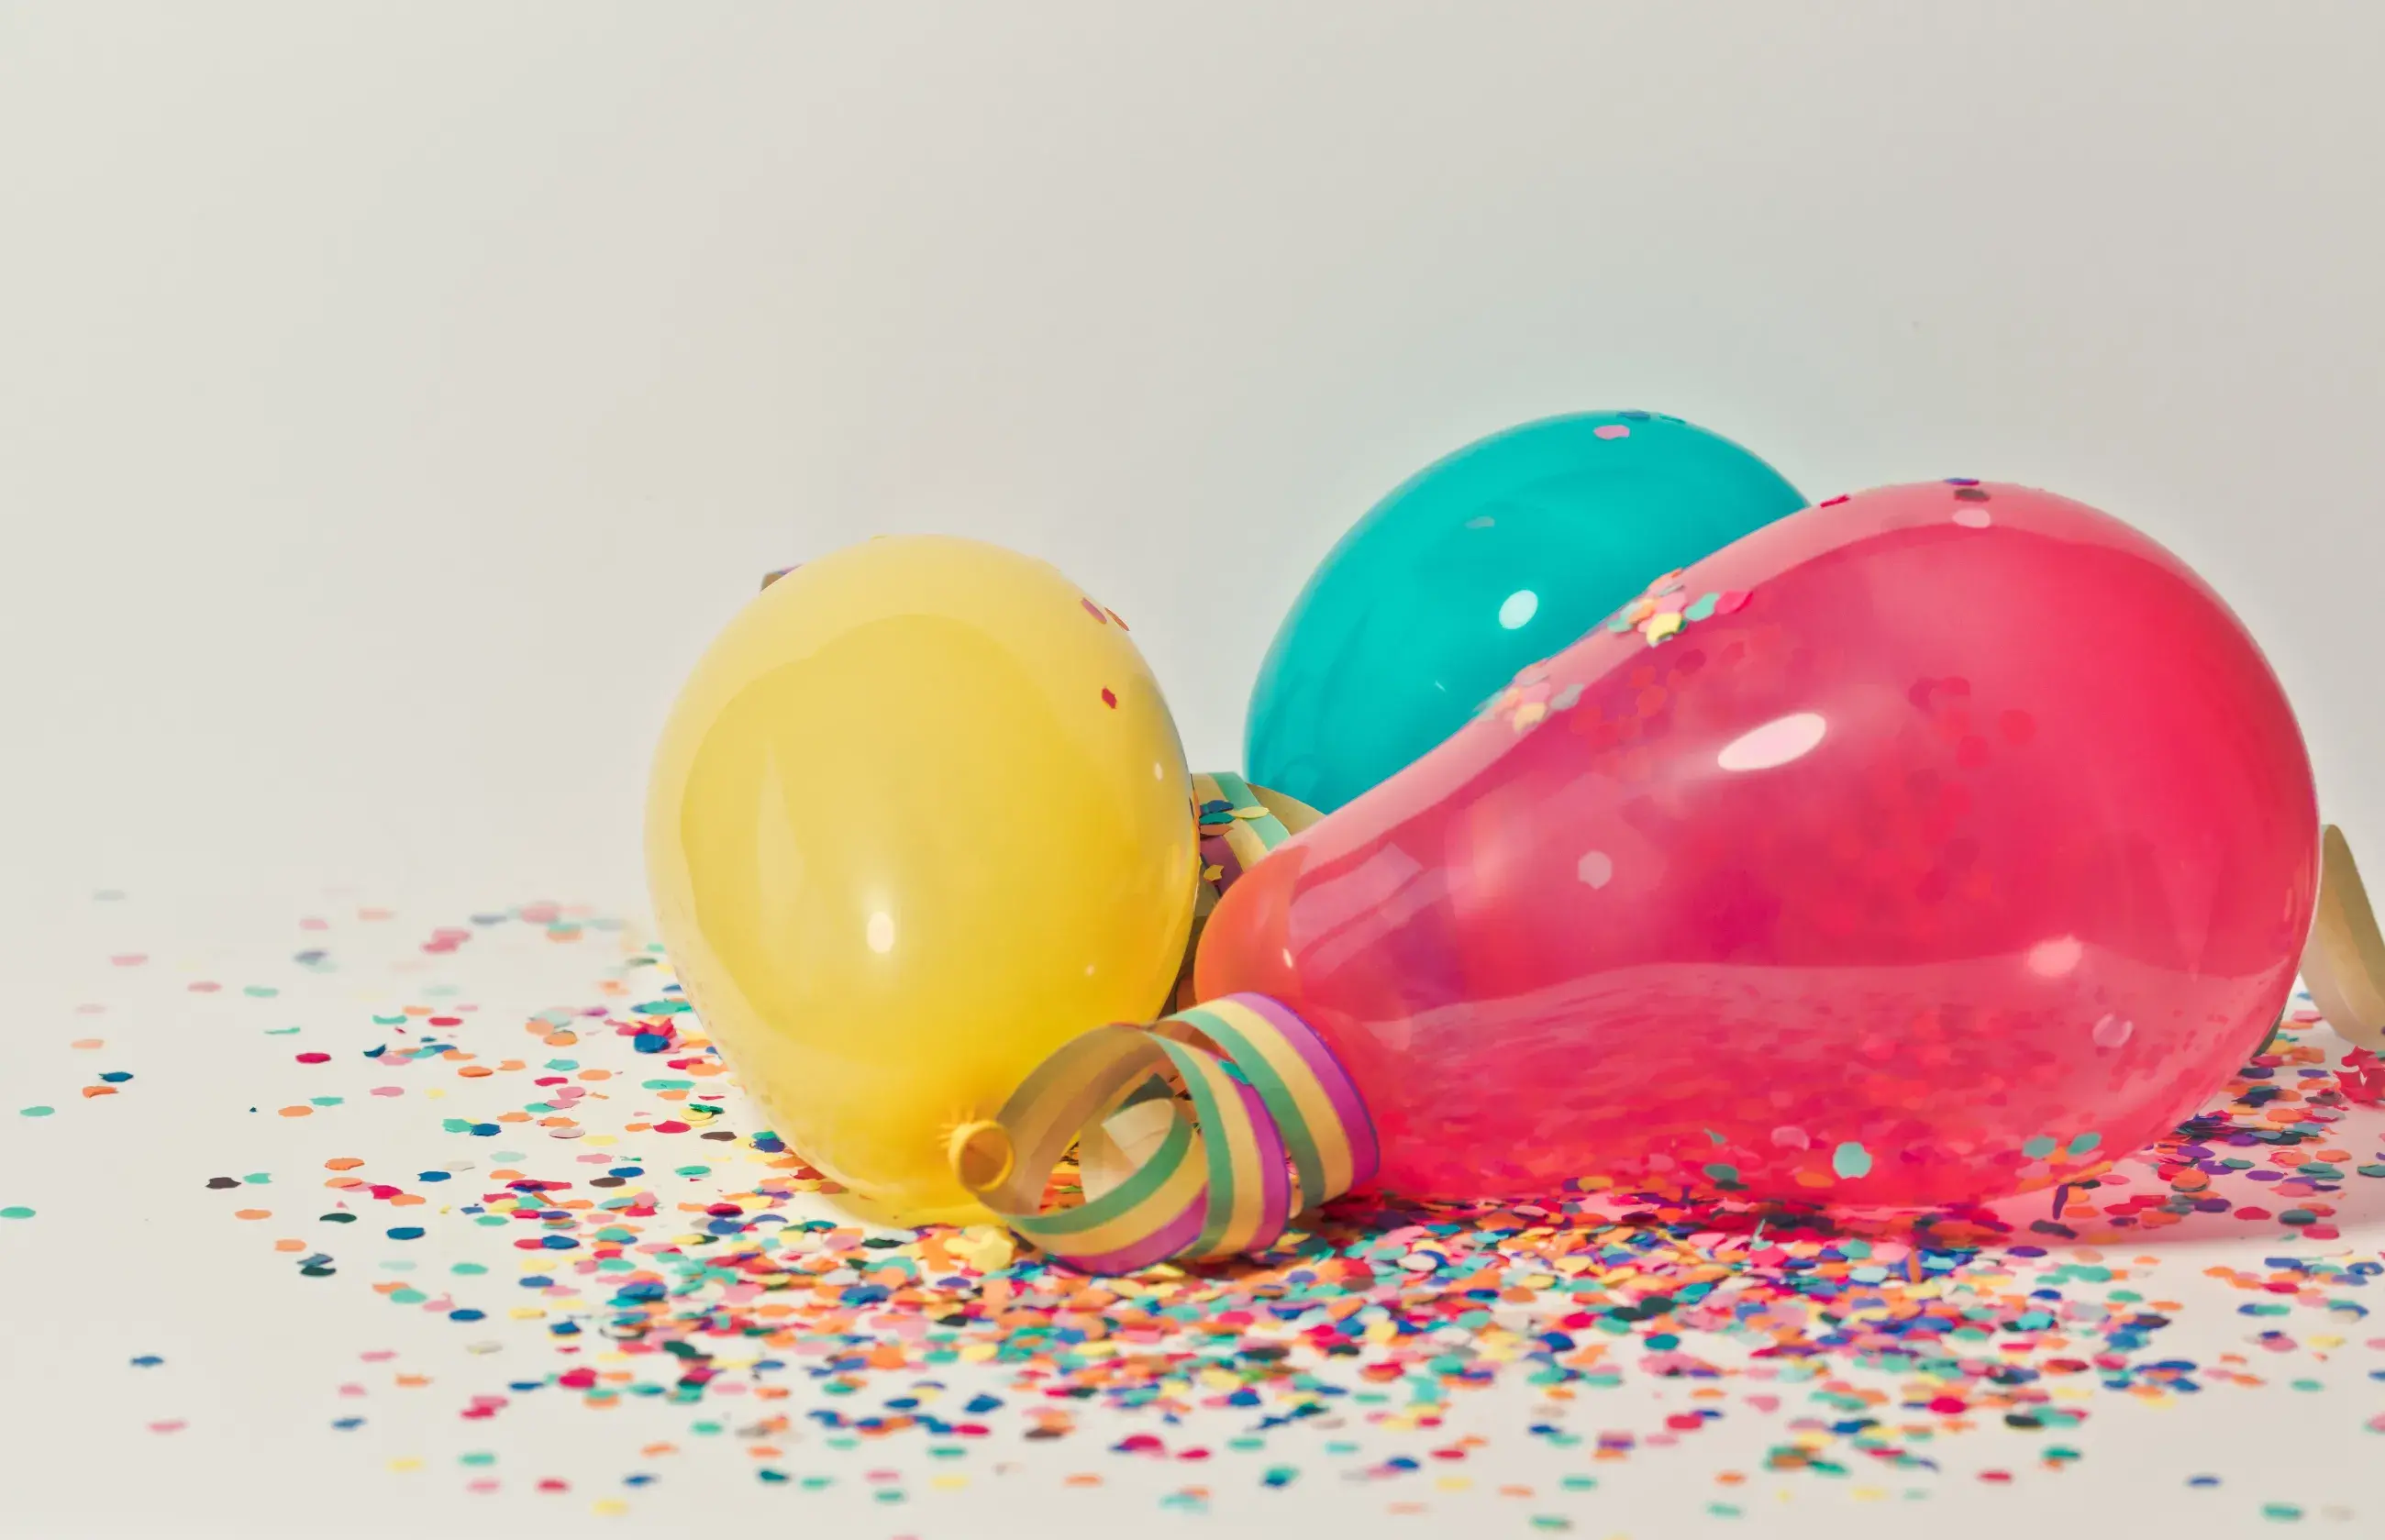 Celebrate balloons